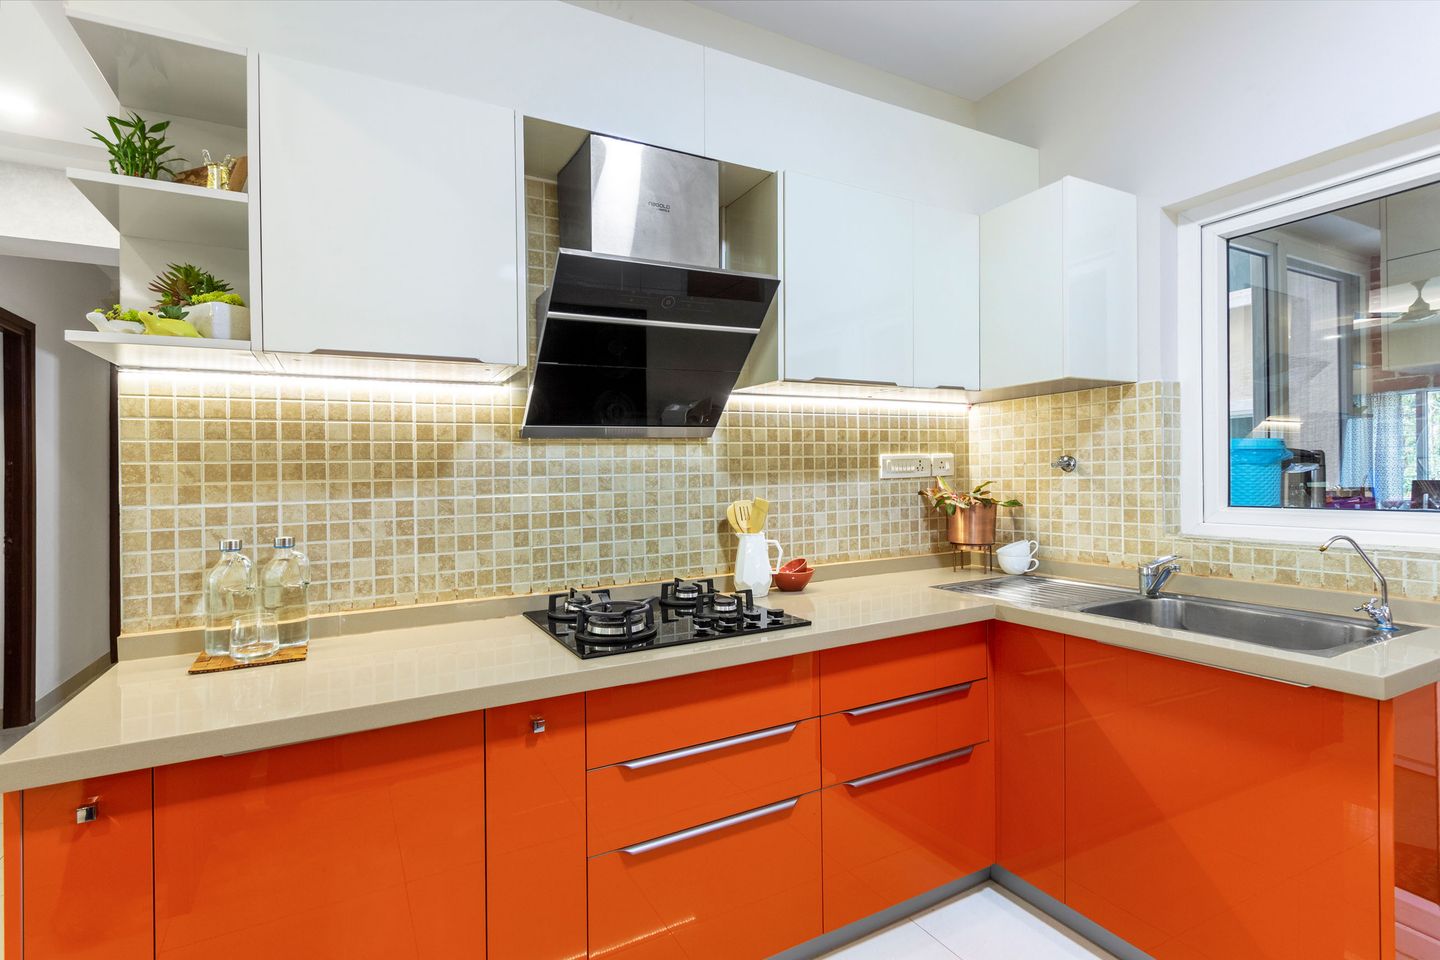 Modular Indian Kitchen Design In Orange And White | Livspace